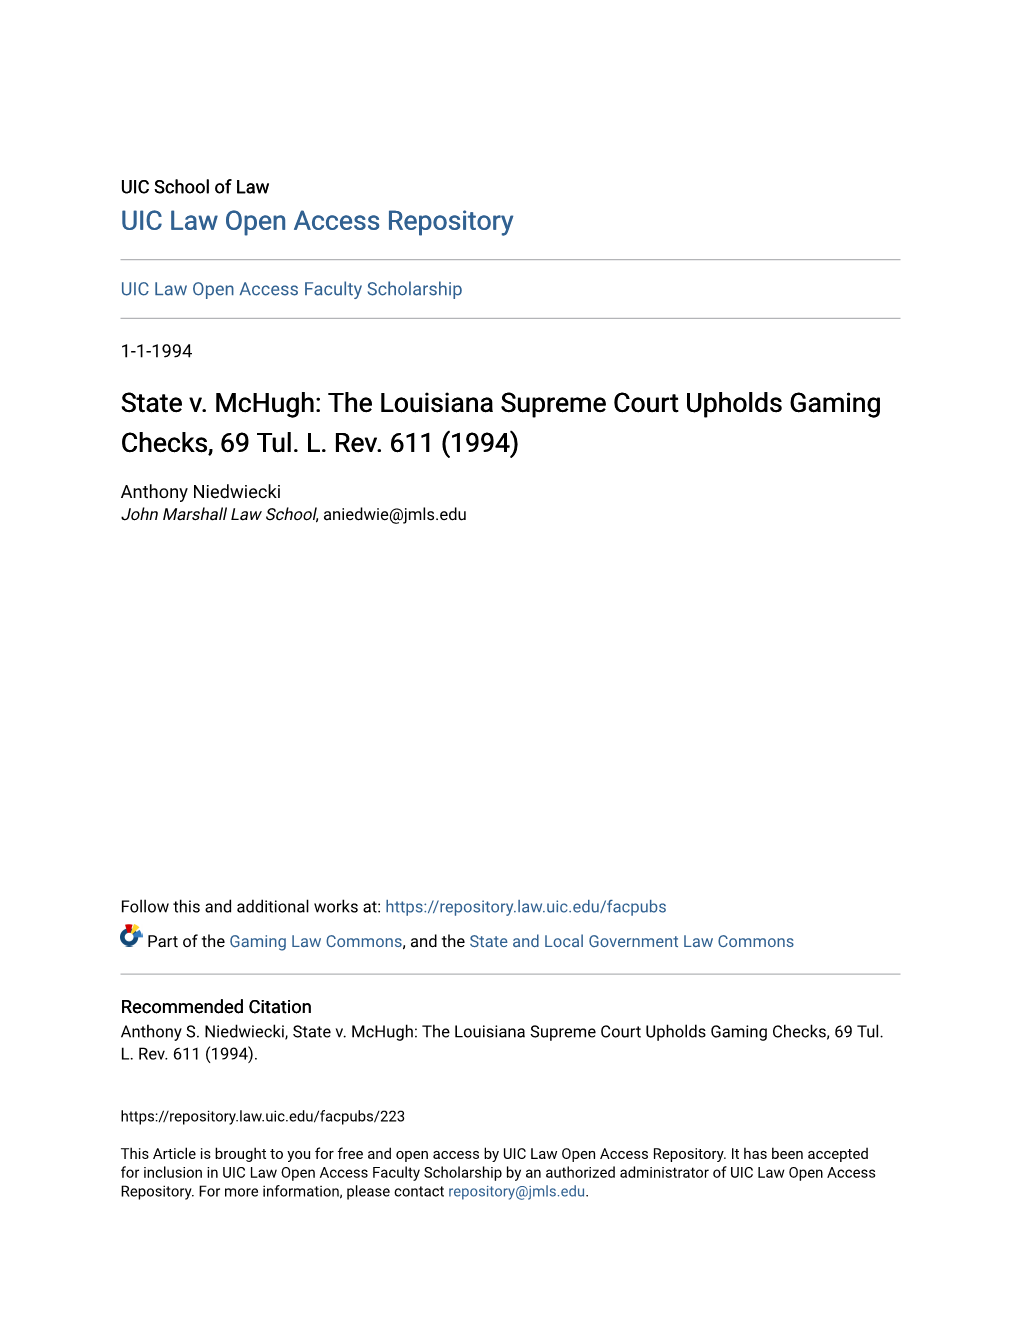 The Louisiana Supreme Court Upholds Gaming Checks, 69 Tul. L